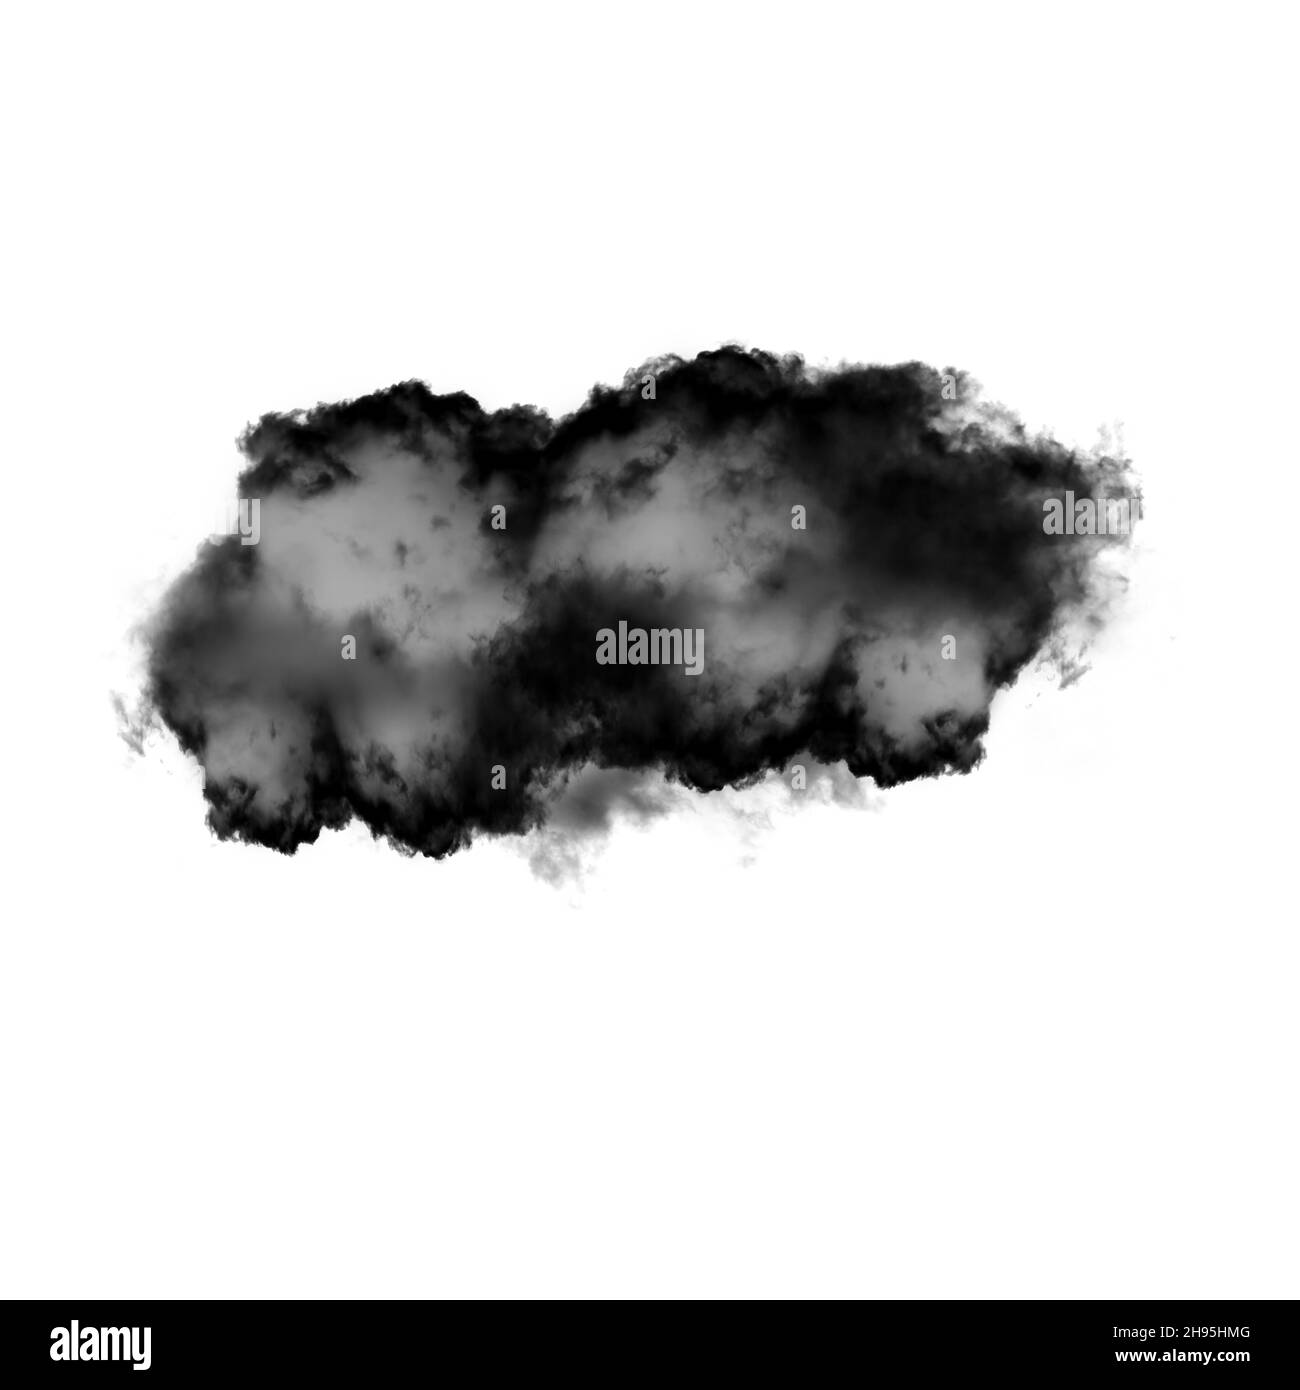 Black cloud or smoke isolated over white background, cloud shape illustration Stock Photo